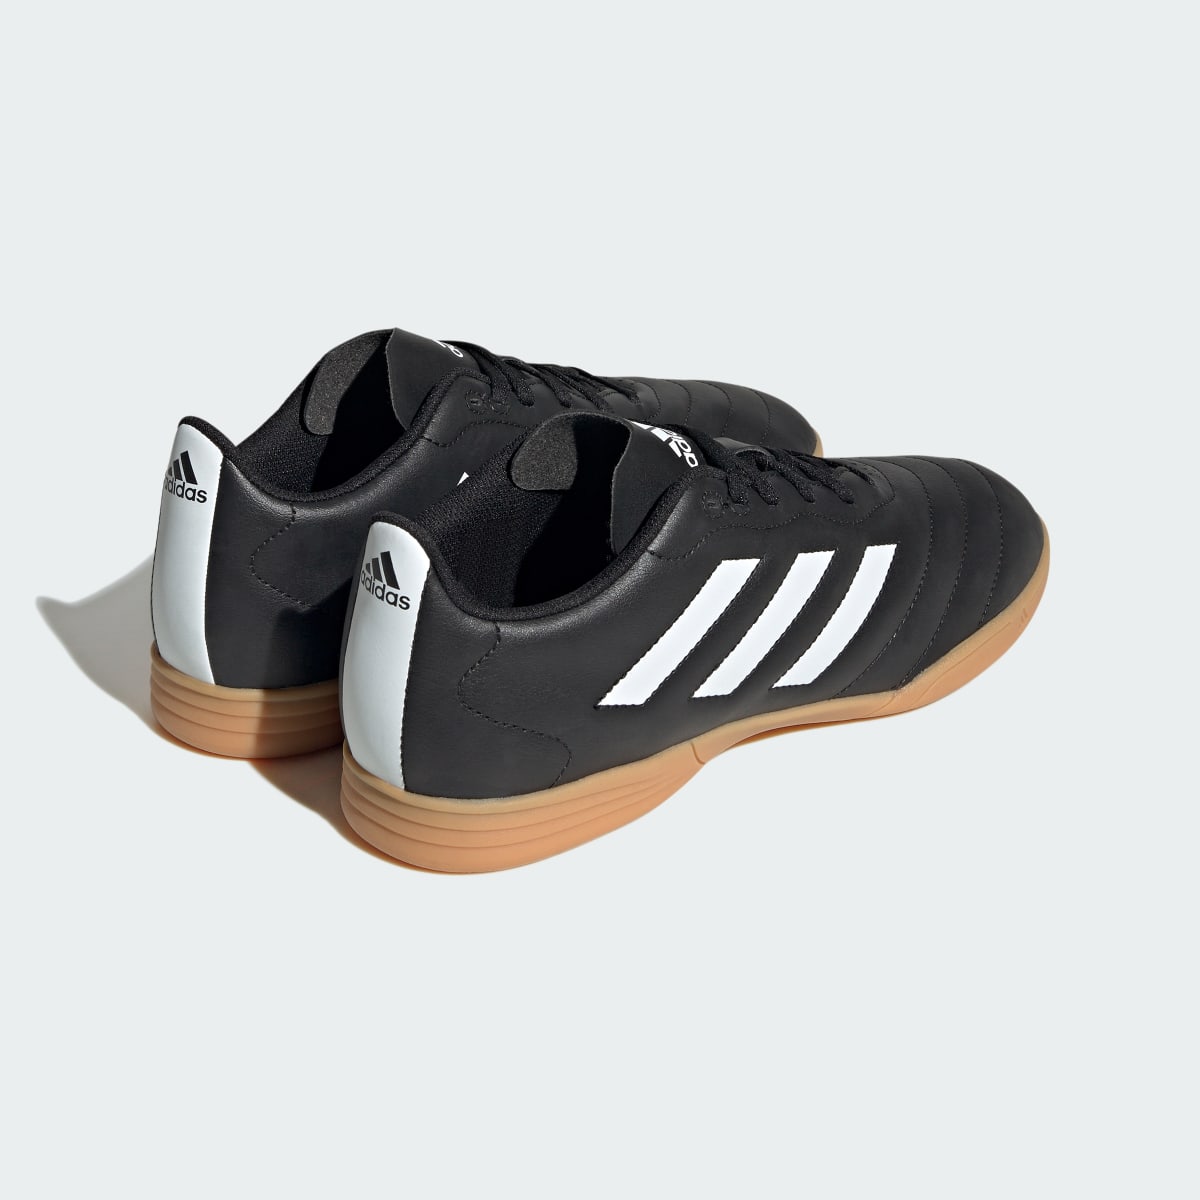 Adidas Goletto VIII Indoor Boots. 6